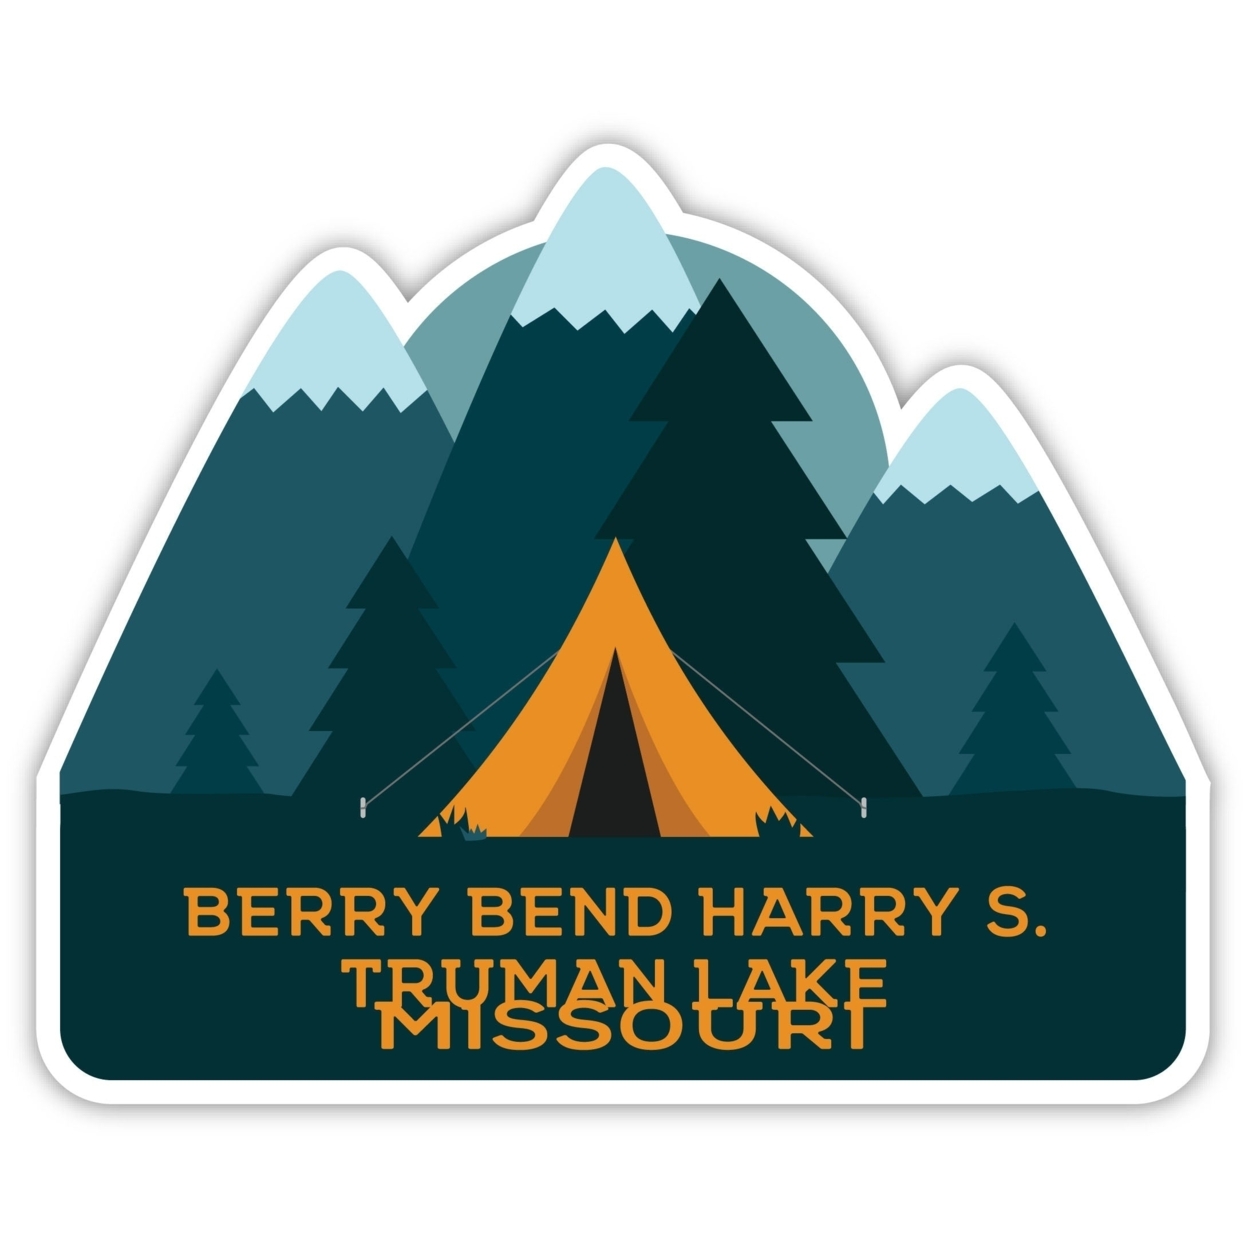 Berry Bend Harry S. Truman Lake Missouri Souvenir Decorative Stickers (Choose Theme And Size) - Single Unit, 10-Inch, Tent